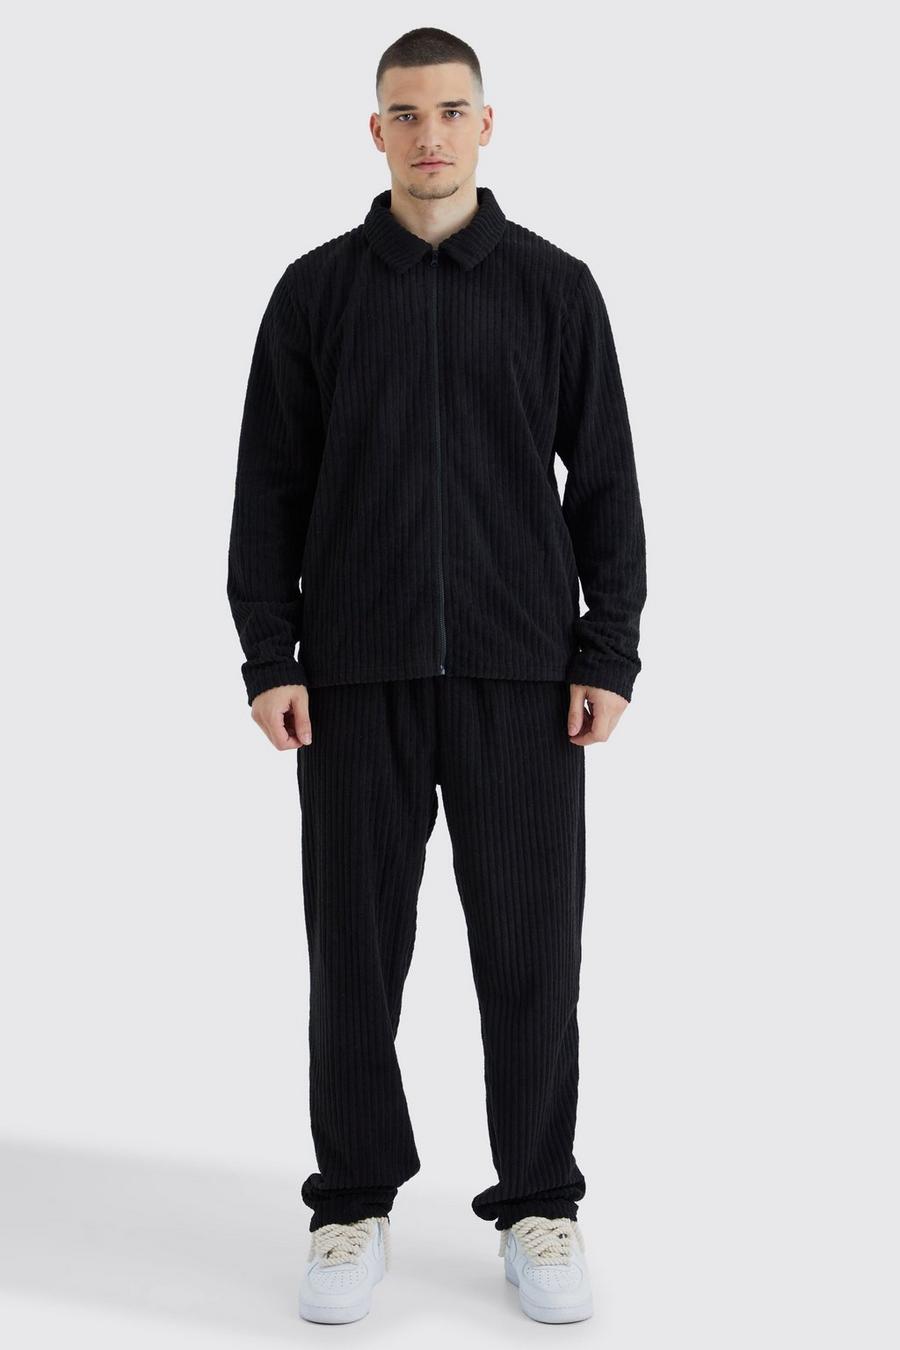 Tall - Ensemble côtelé avec veste Harrington et pantalon, Black image number 1